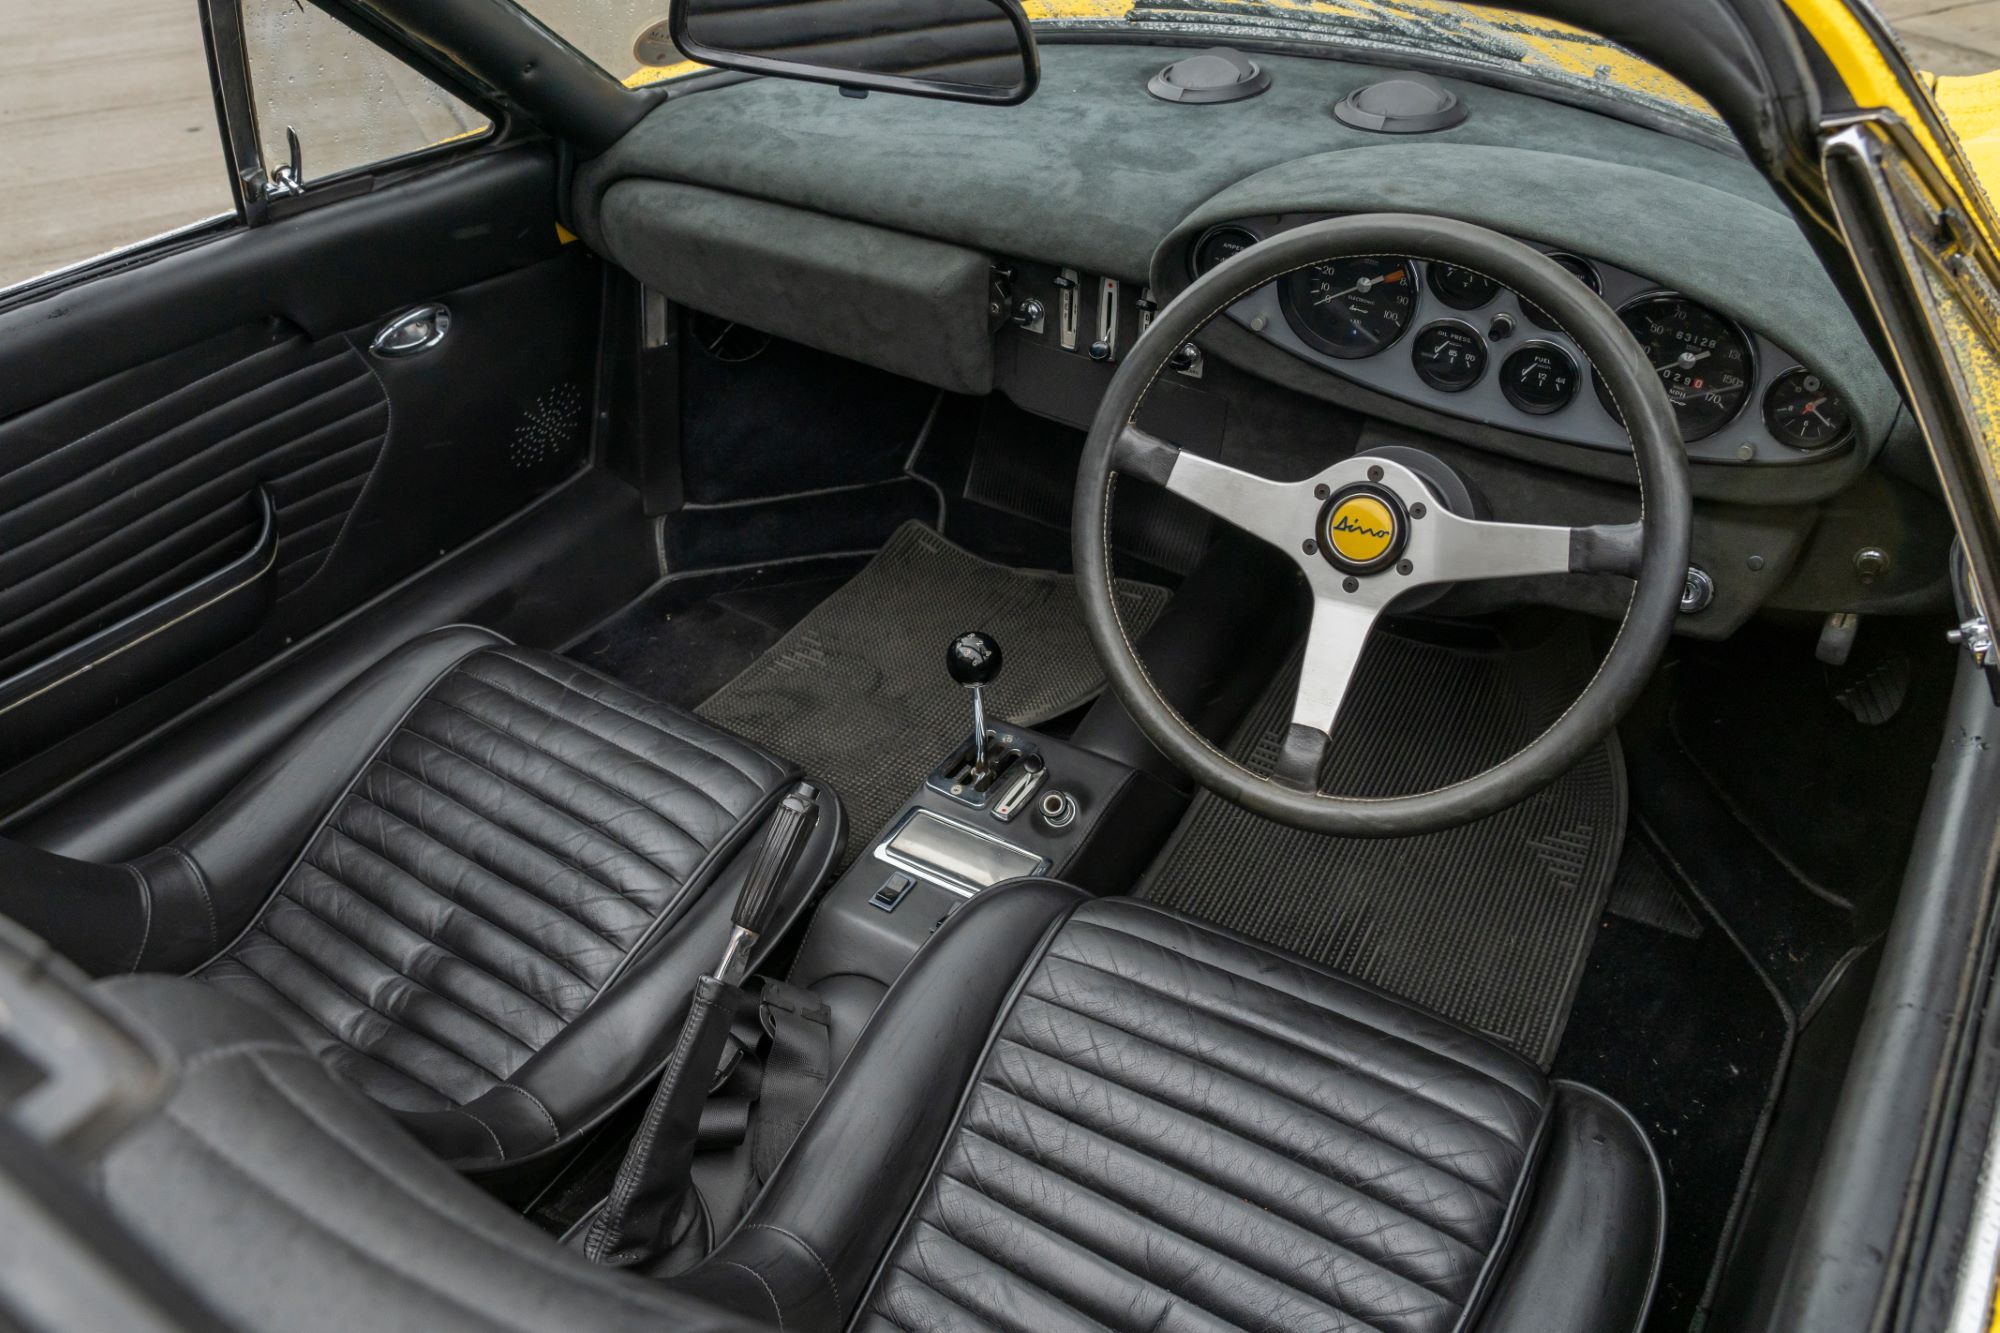 Ferrari 246 Dino GTS